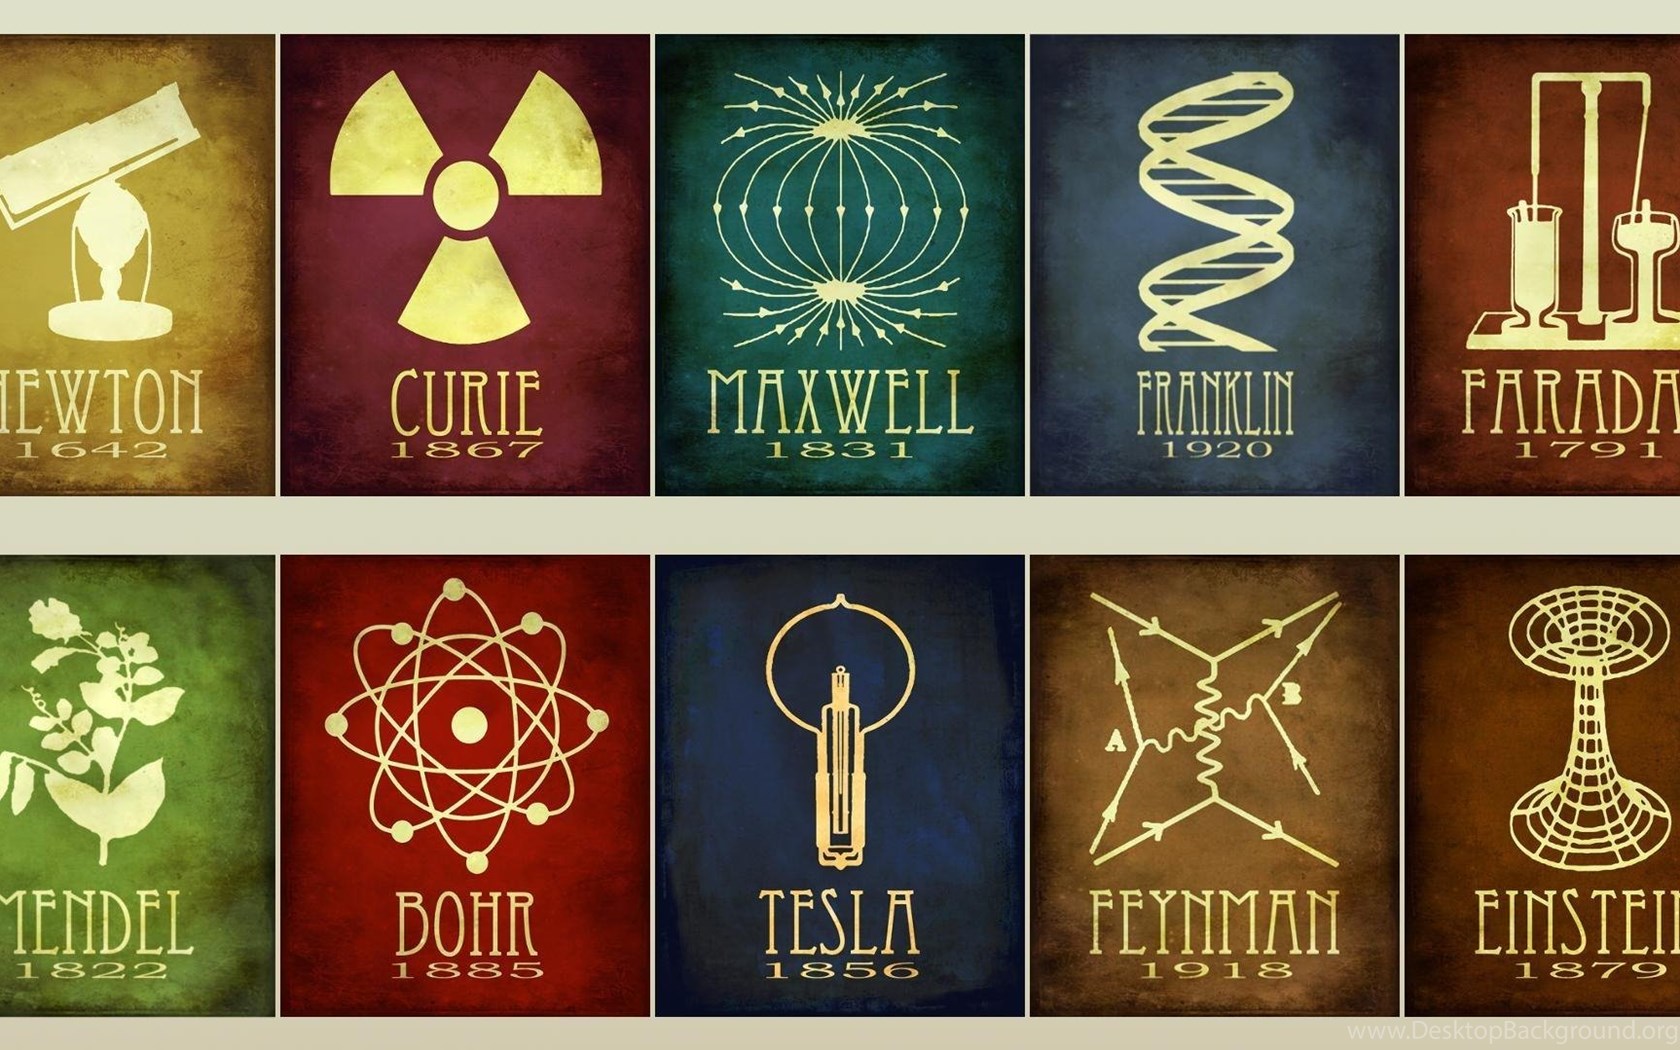 Weird Science Wallpapers